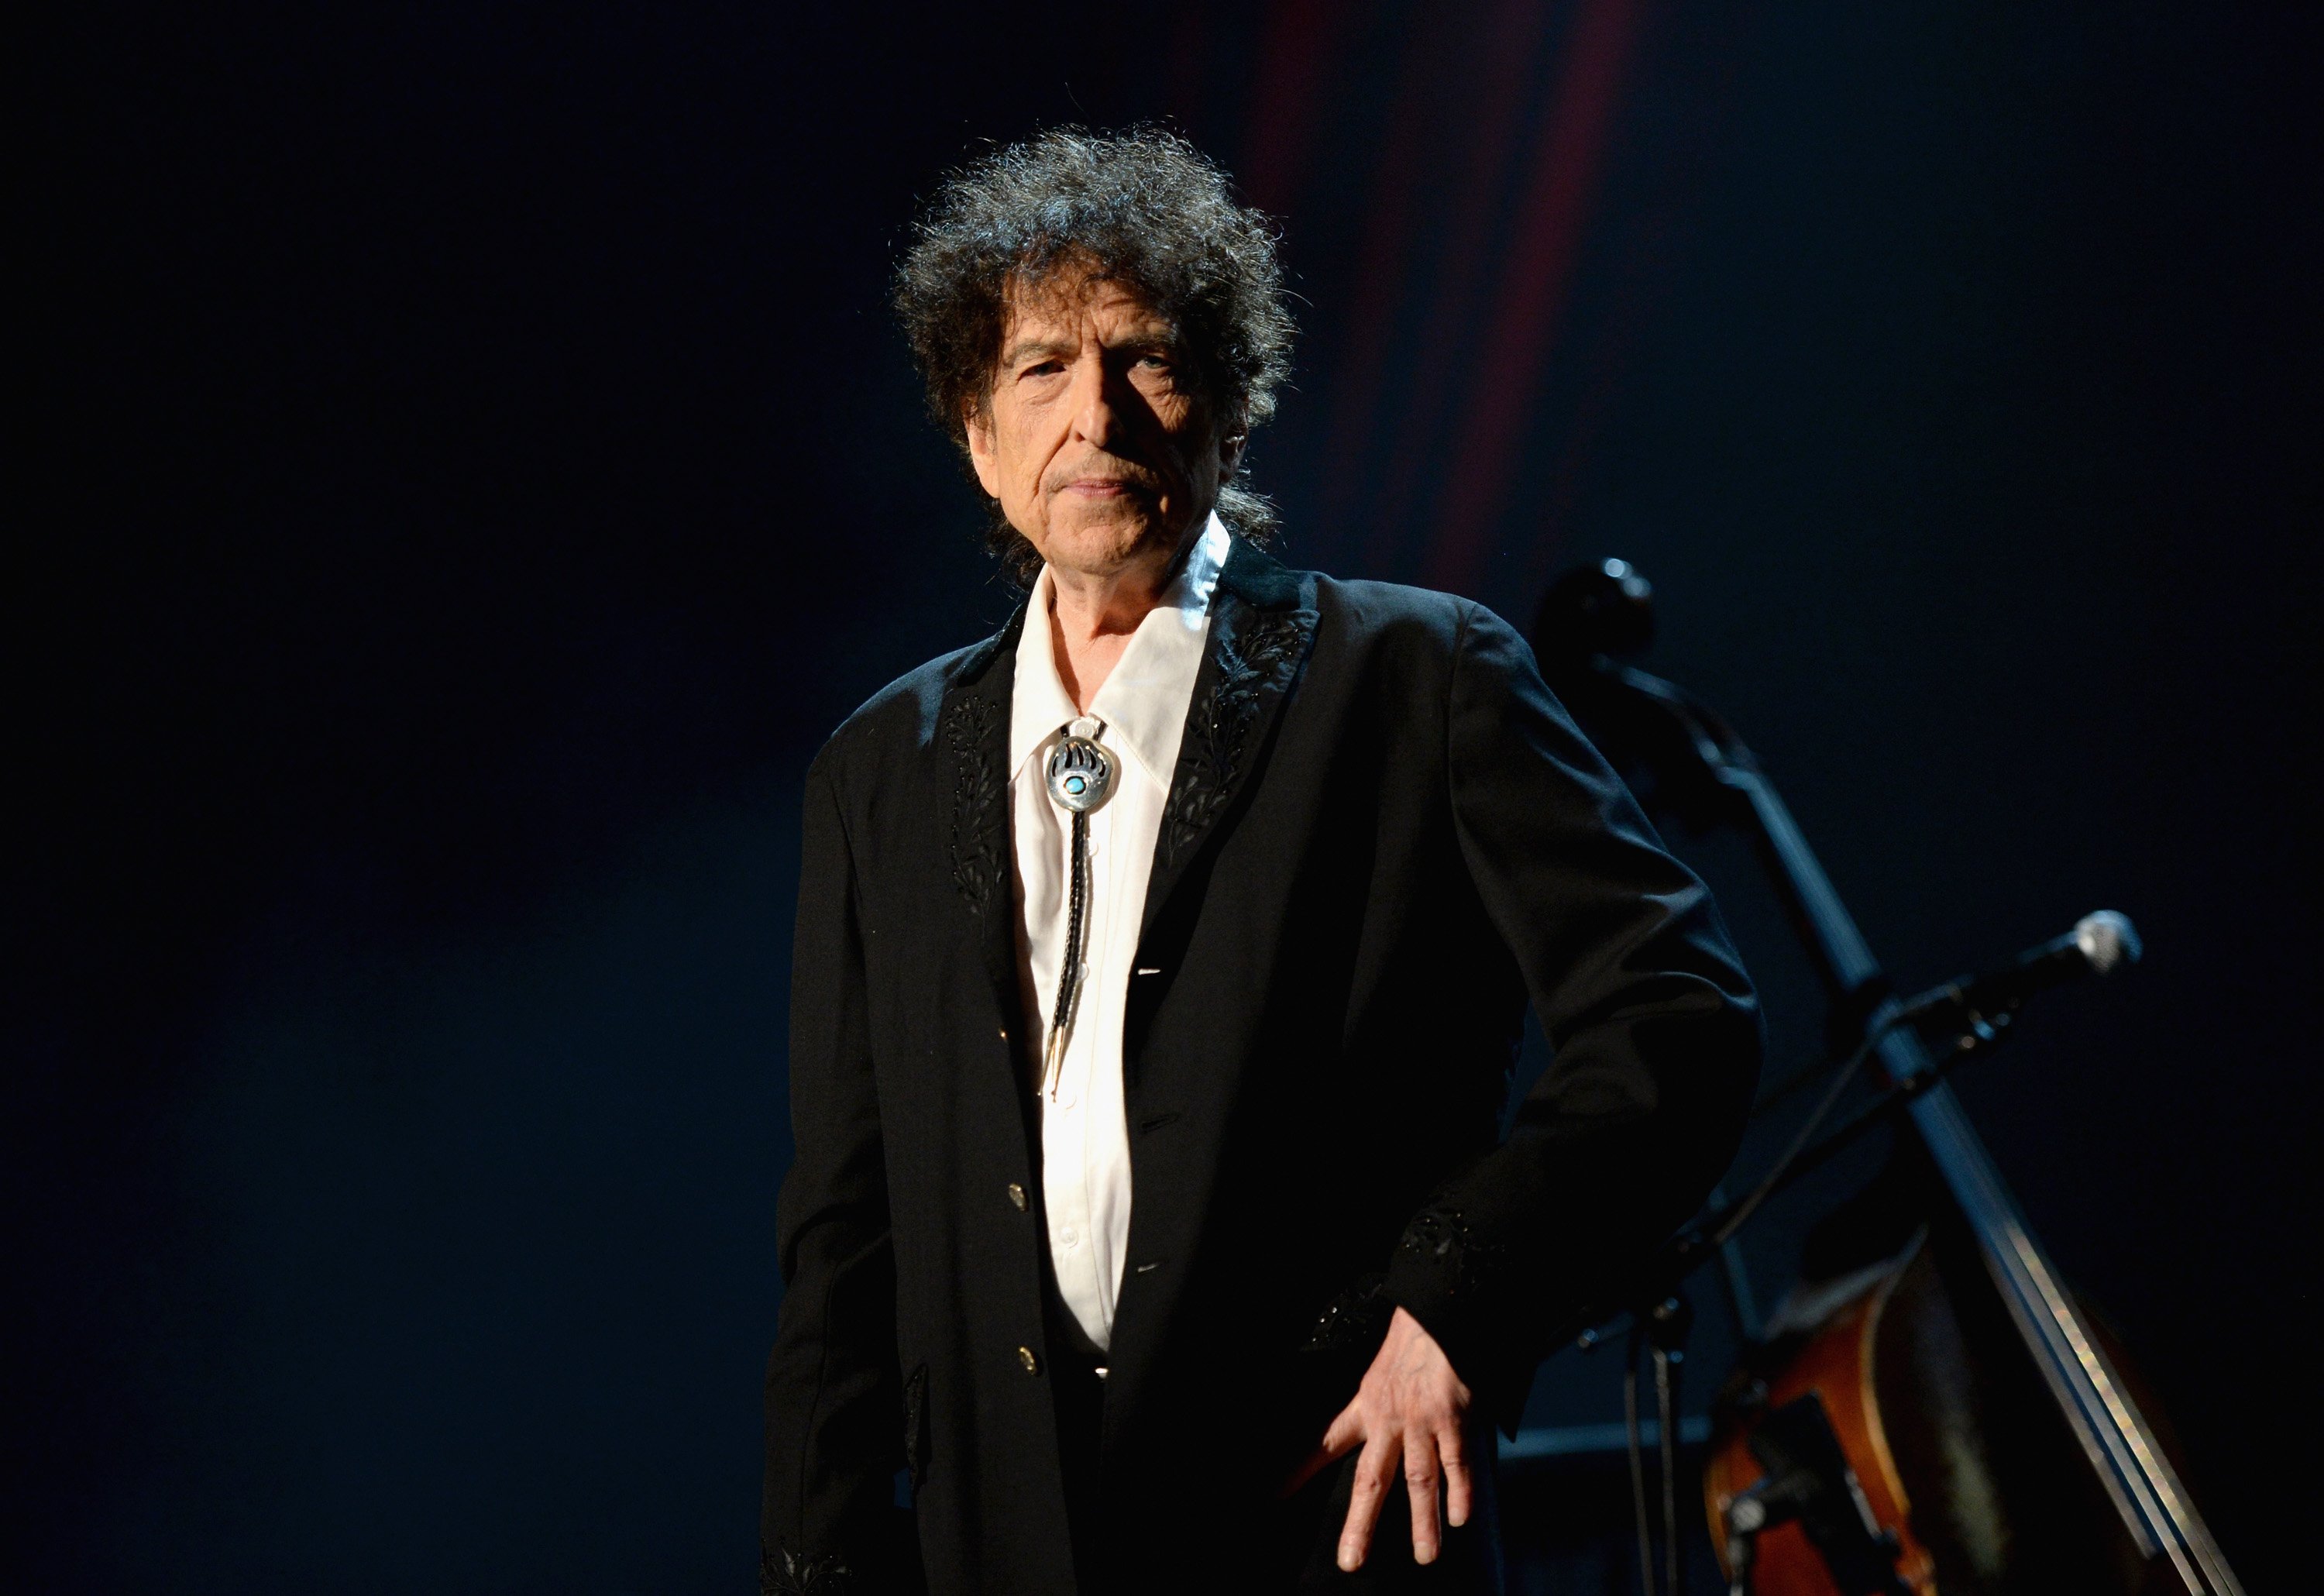 Bob Dylan speaking at an award show